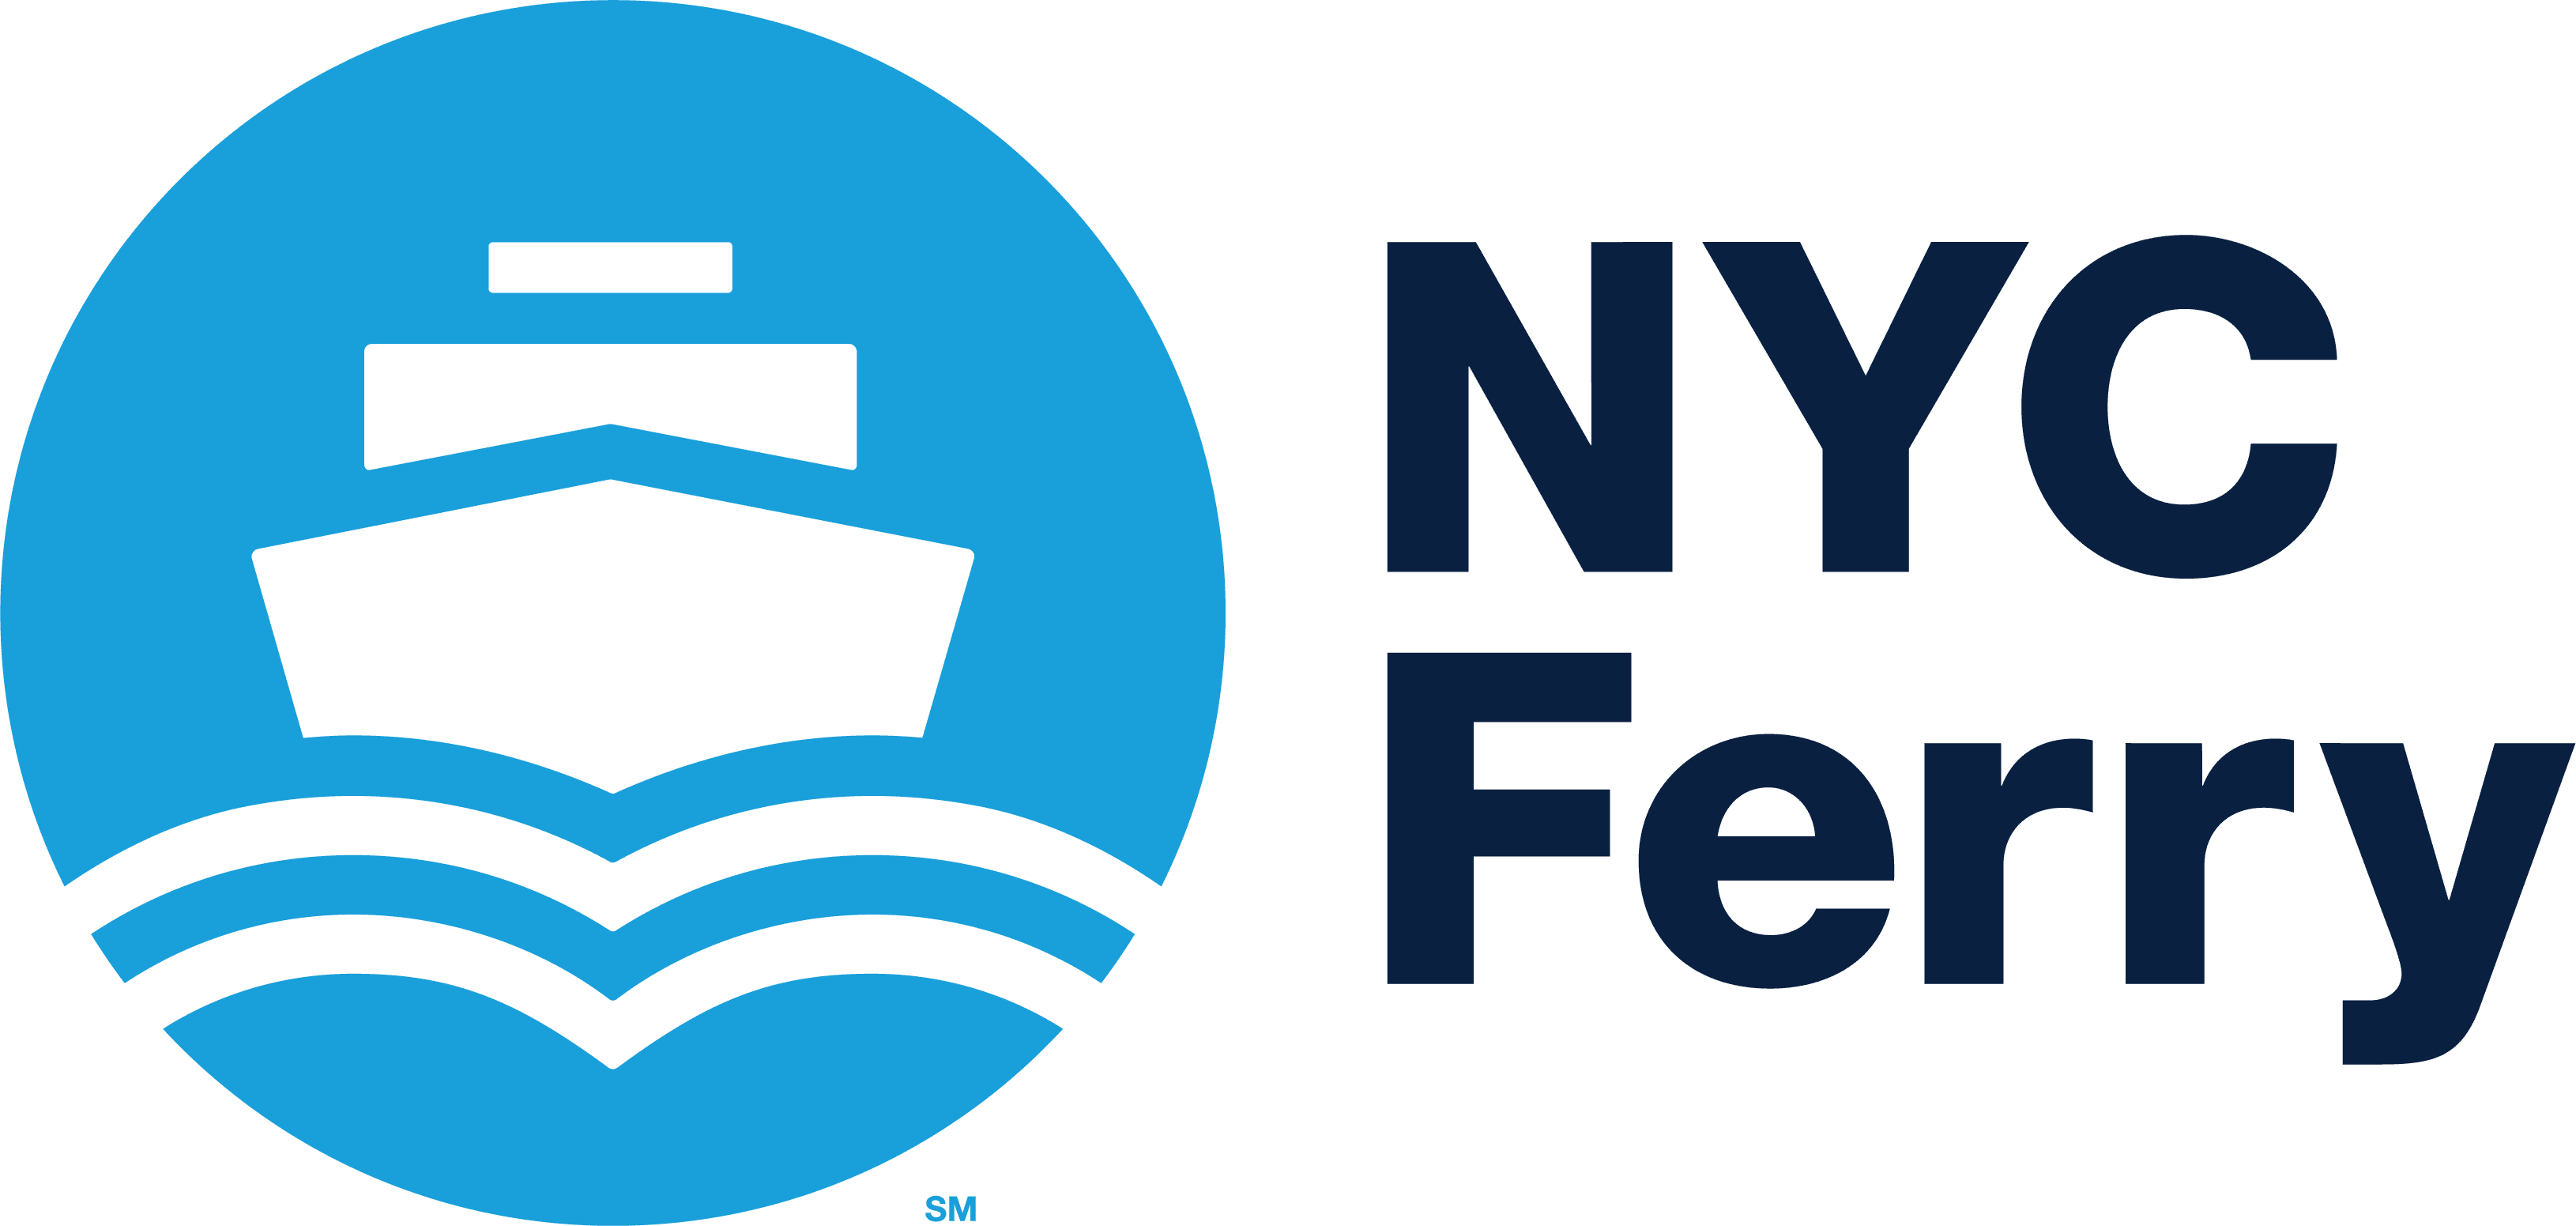 NYC Logo - Logos - New York City Ferry Service